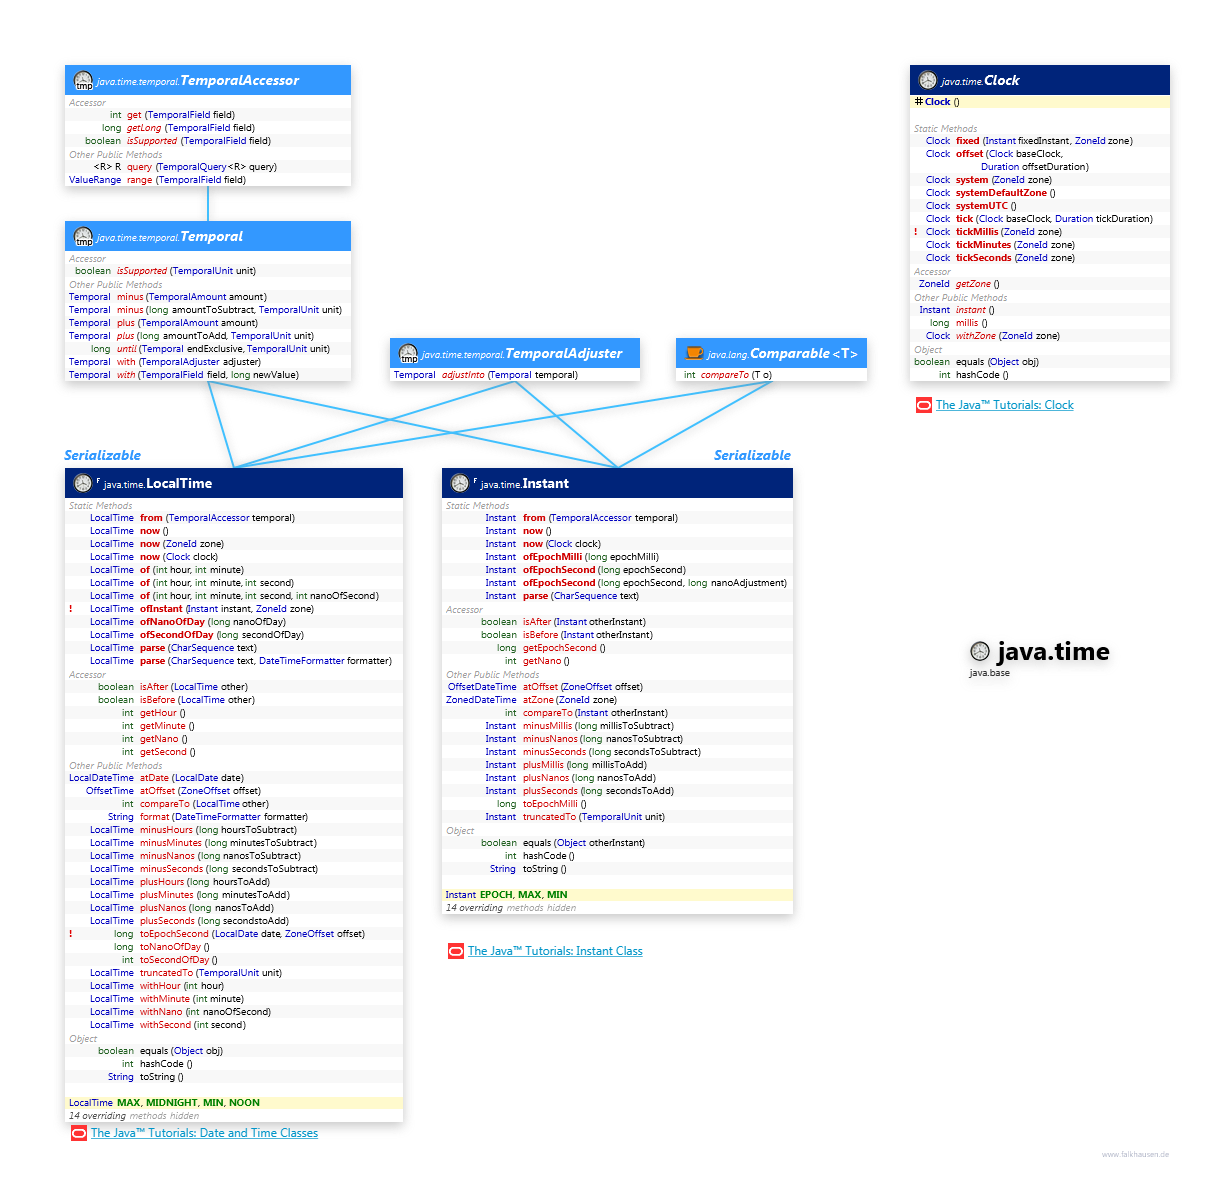 java.time LocalTime class diagram and api documentation for Java 10